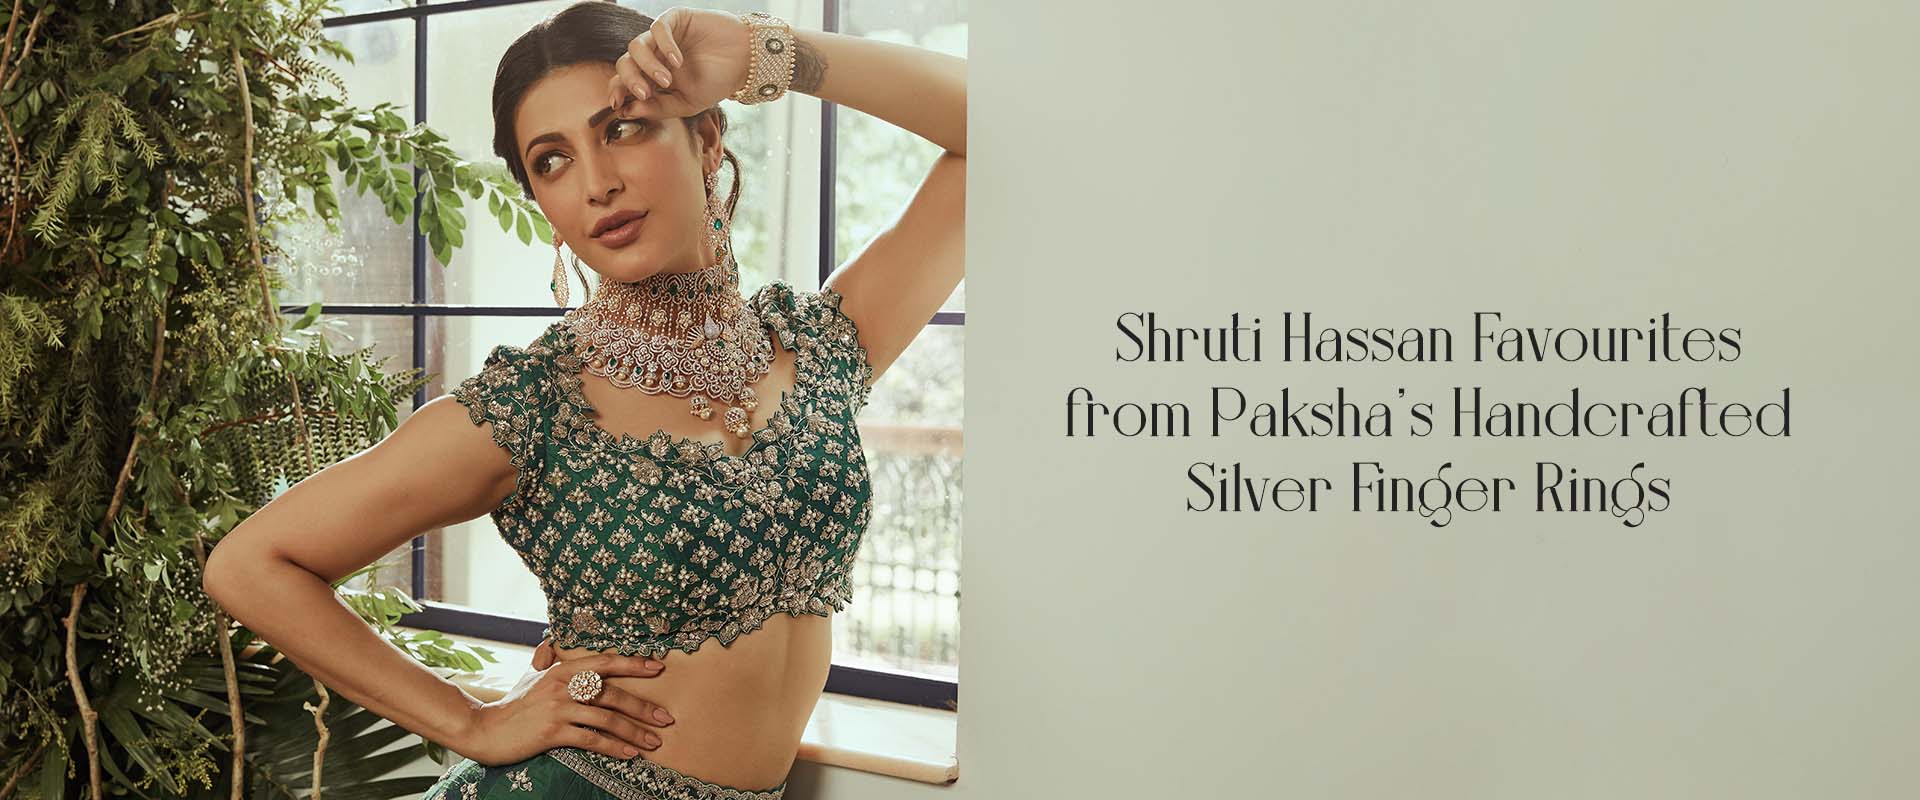 Shruti Hassan Favorites from Paksha's Handcrafted Silver Finger Rings